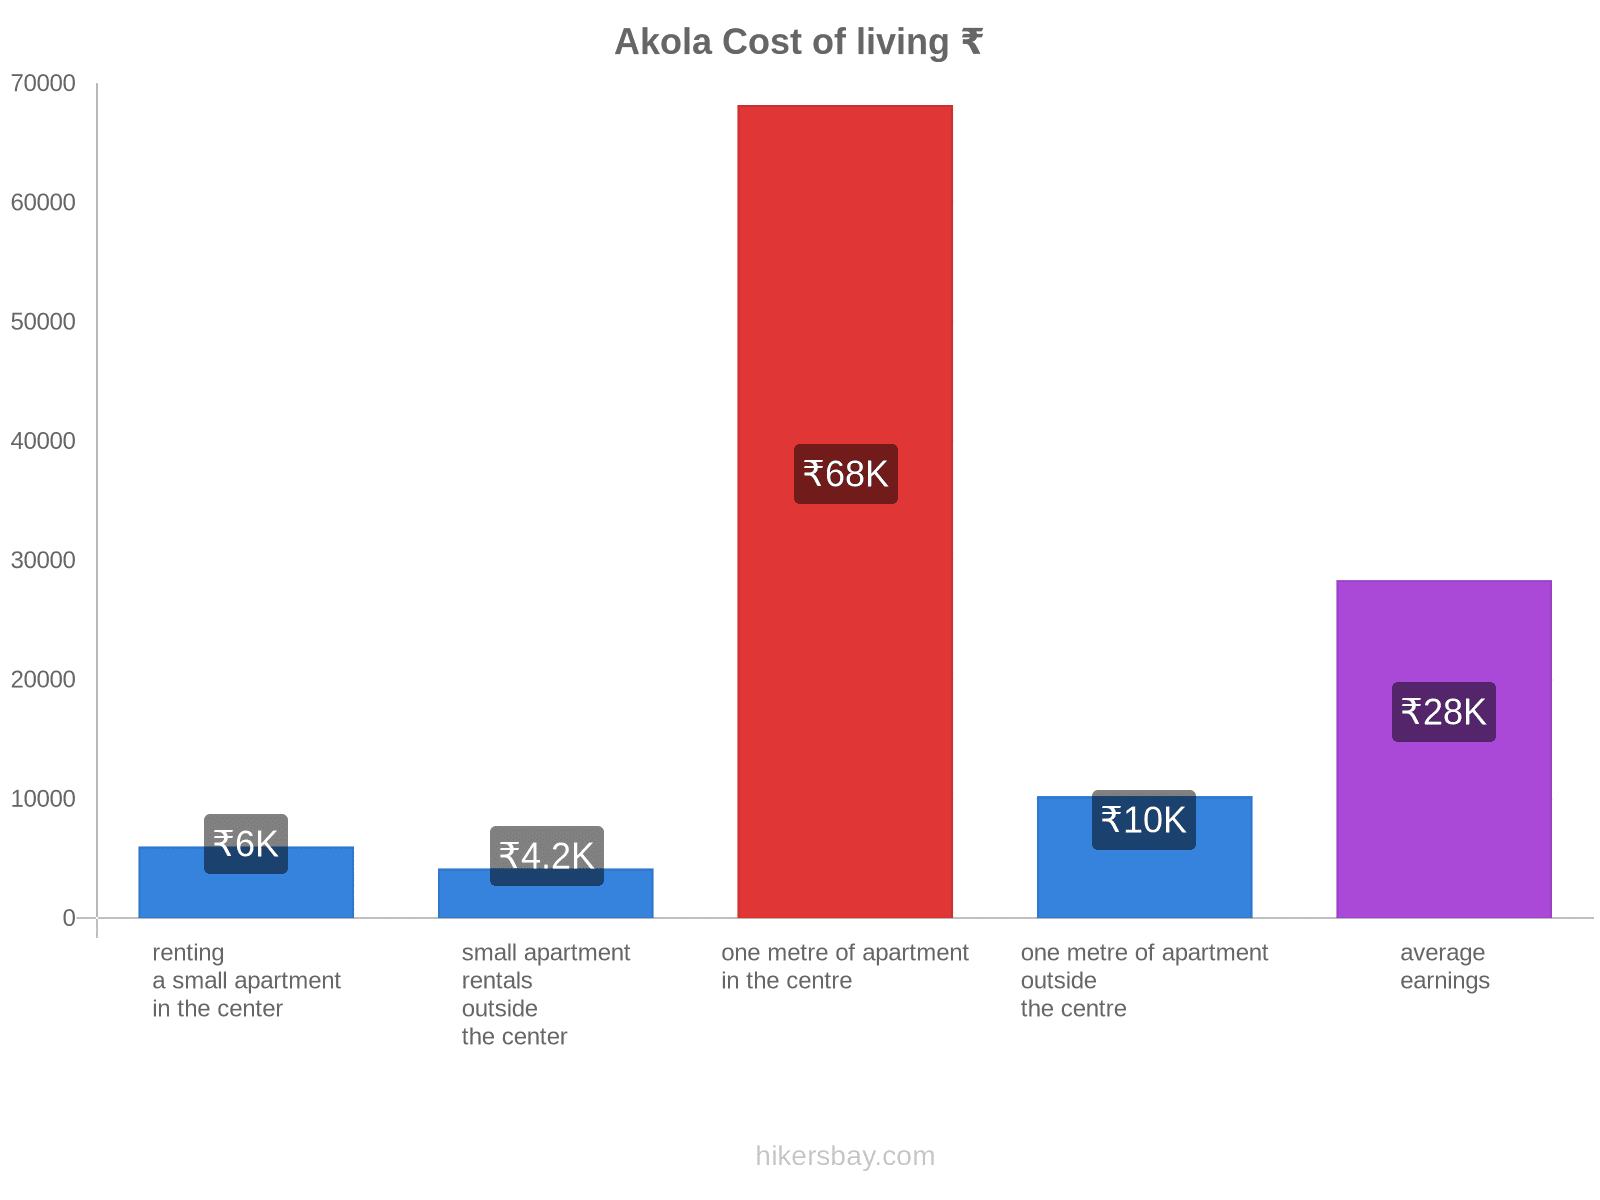 Akola cost of living hikersbay.com